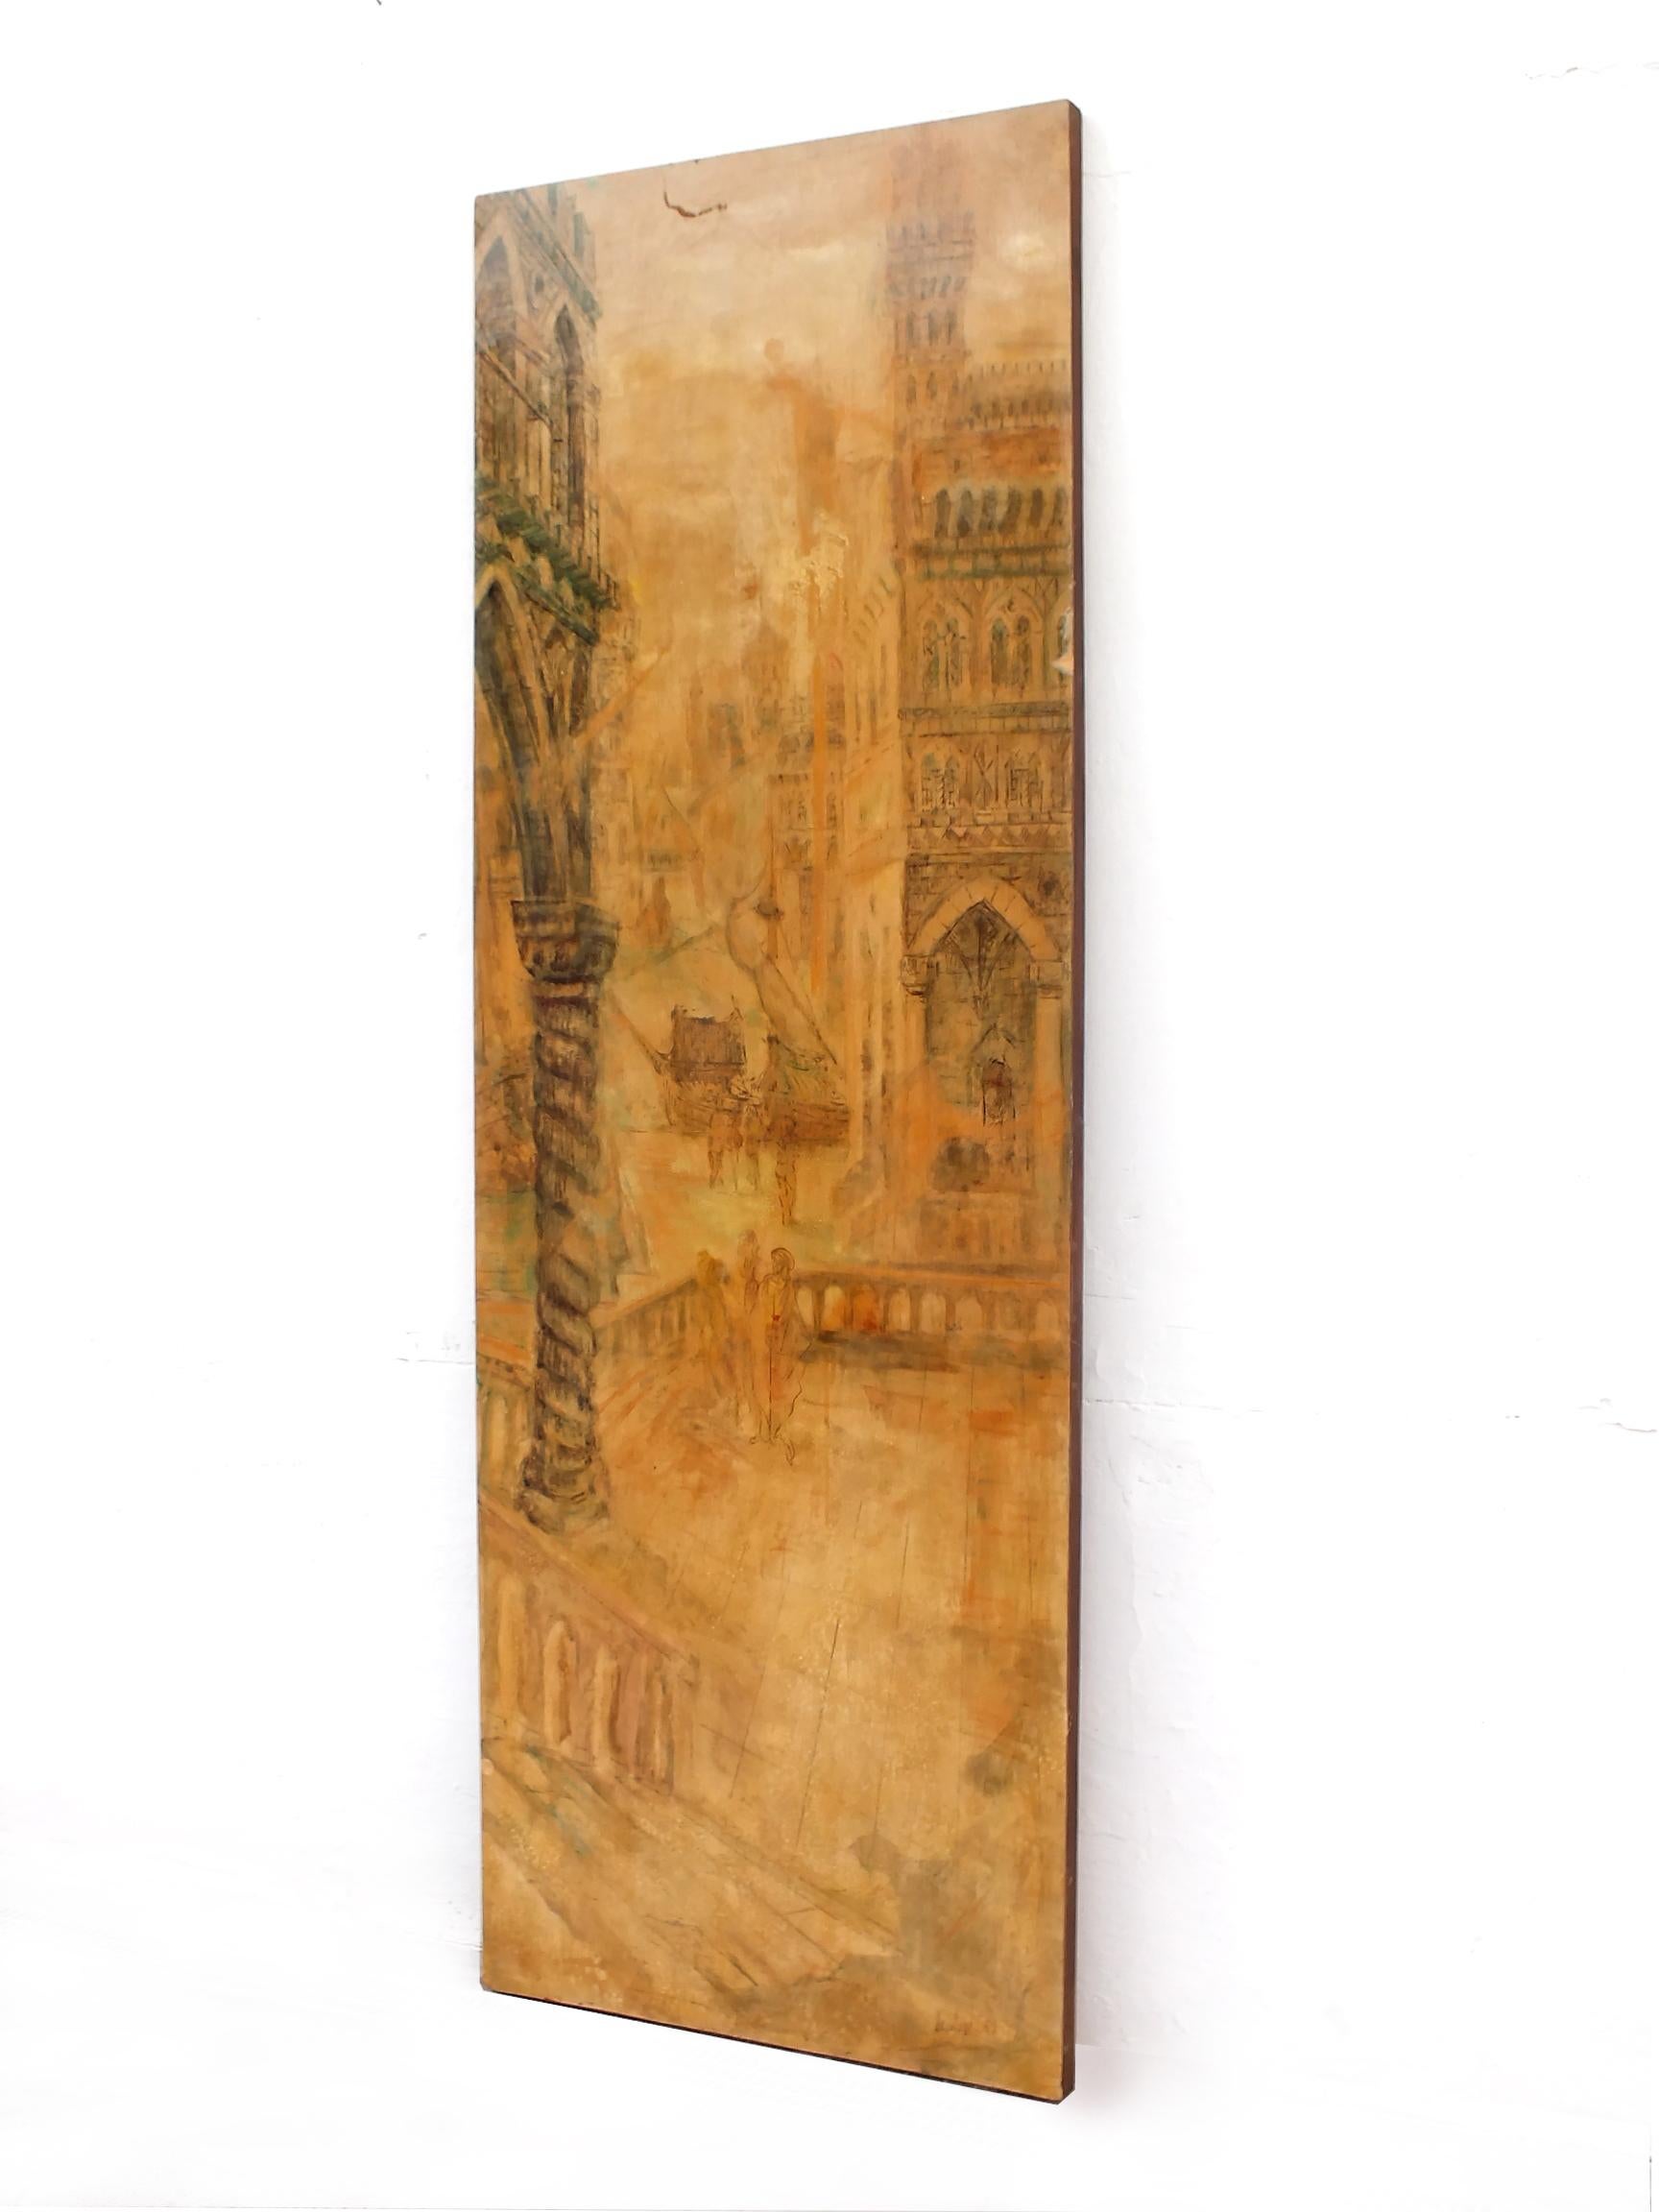 1950s Decalage Italy Turin Design Aloisi De Cavero Girardi Wood Panel For Sale 3